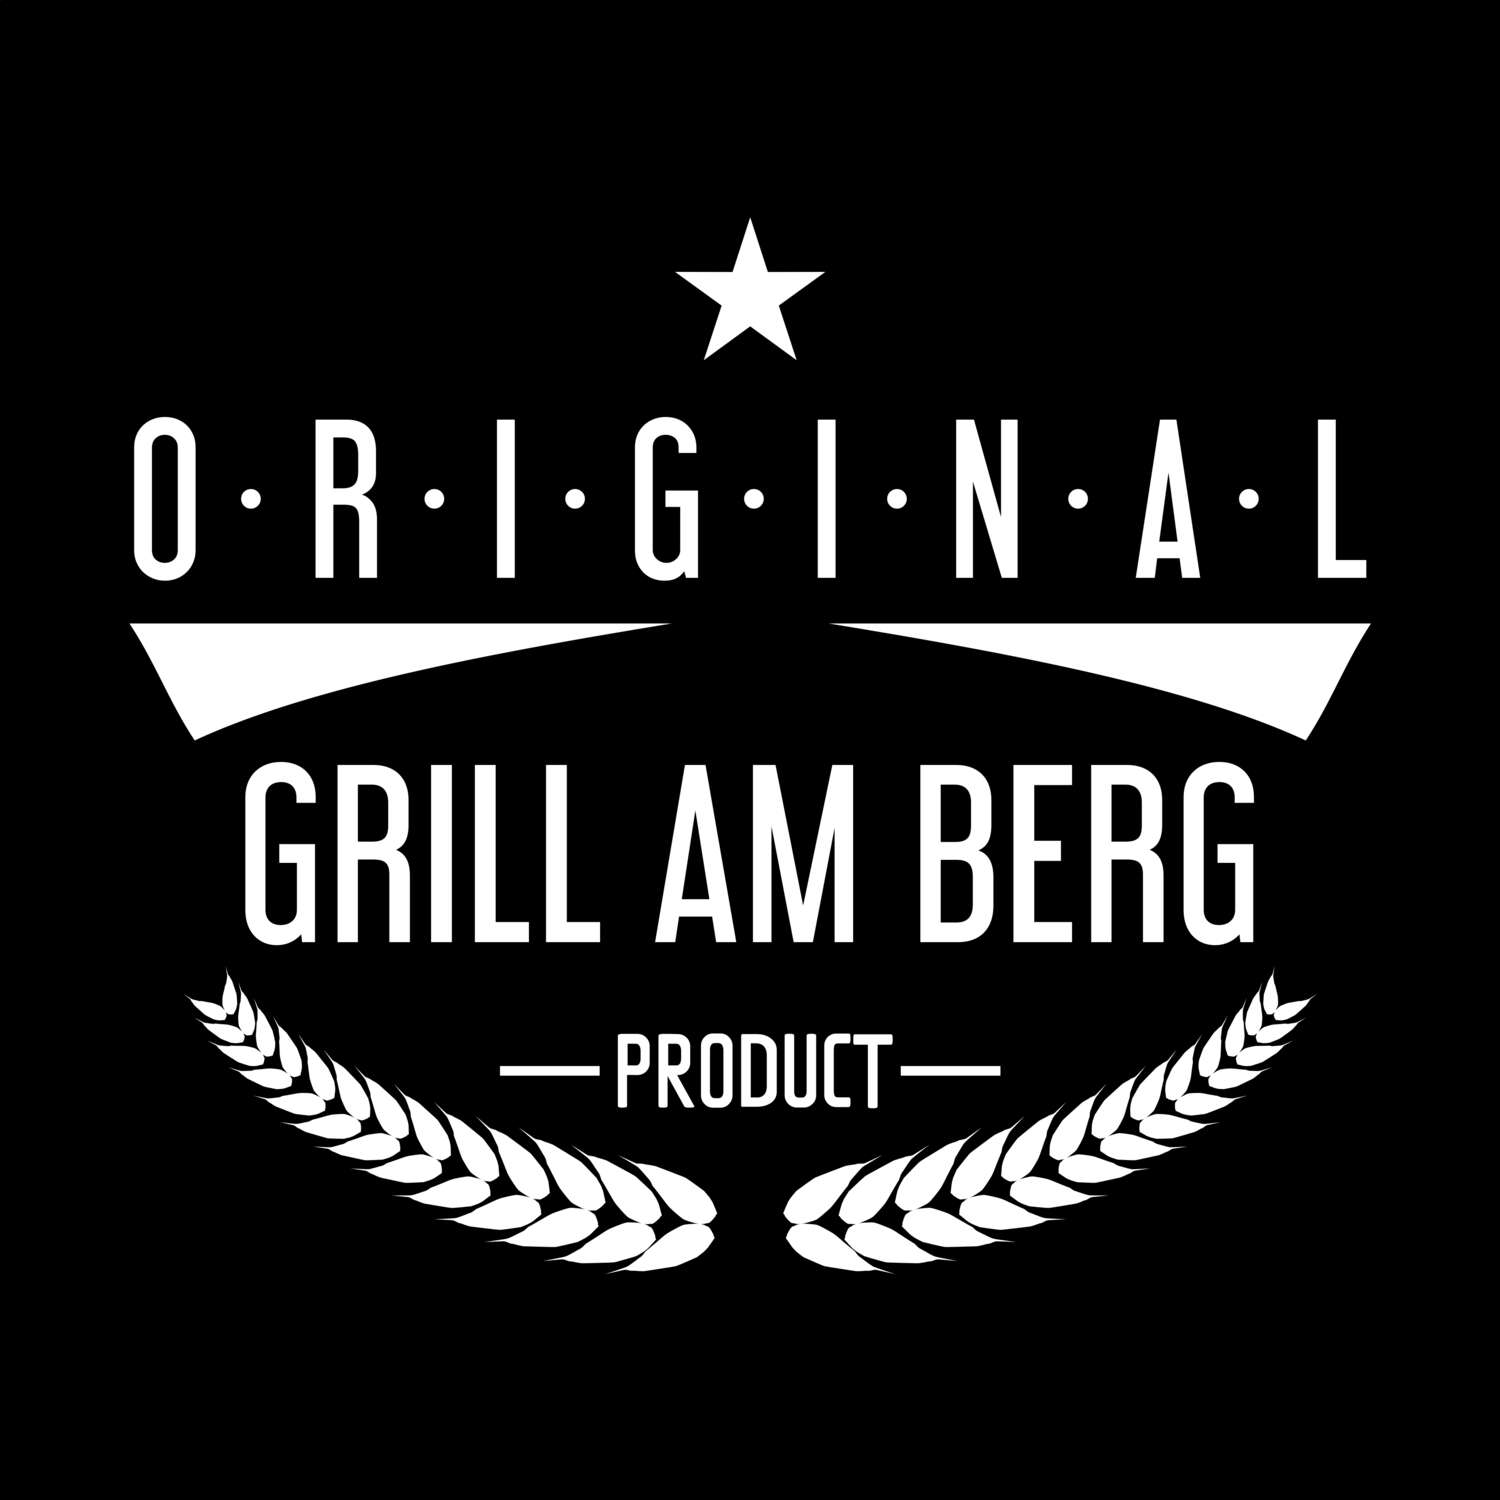 Grill am Berg T-Shirt »Original Product«